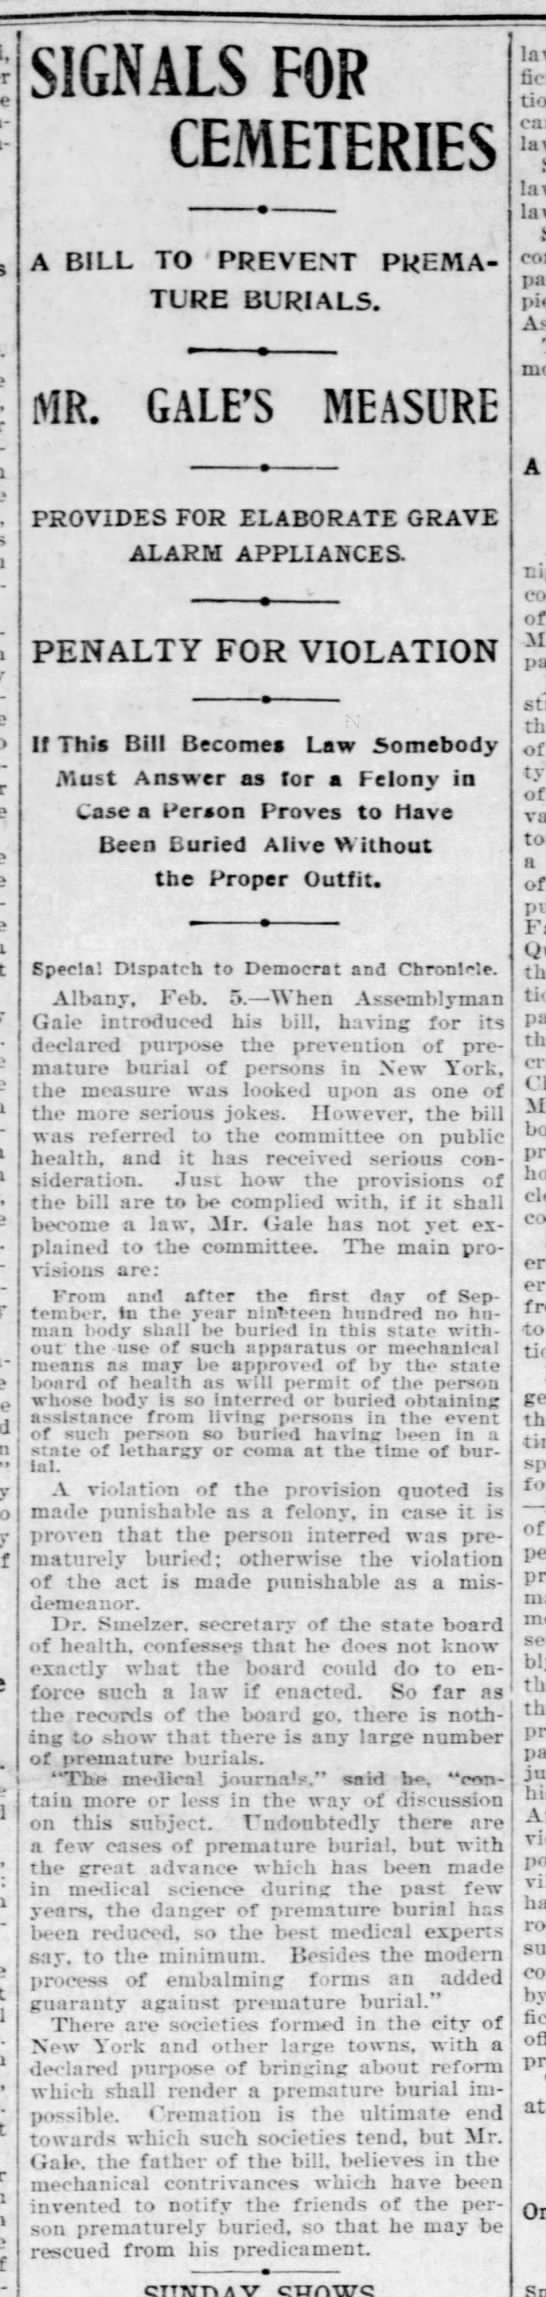 New York bill aimed to prevent premature burials (1900) - 